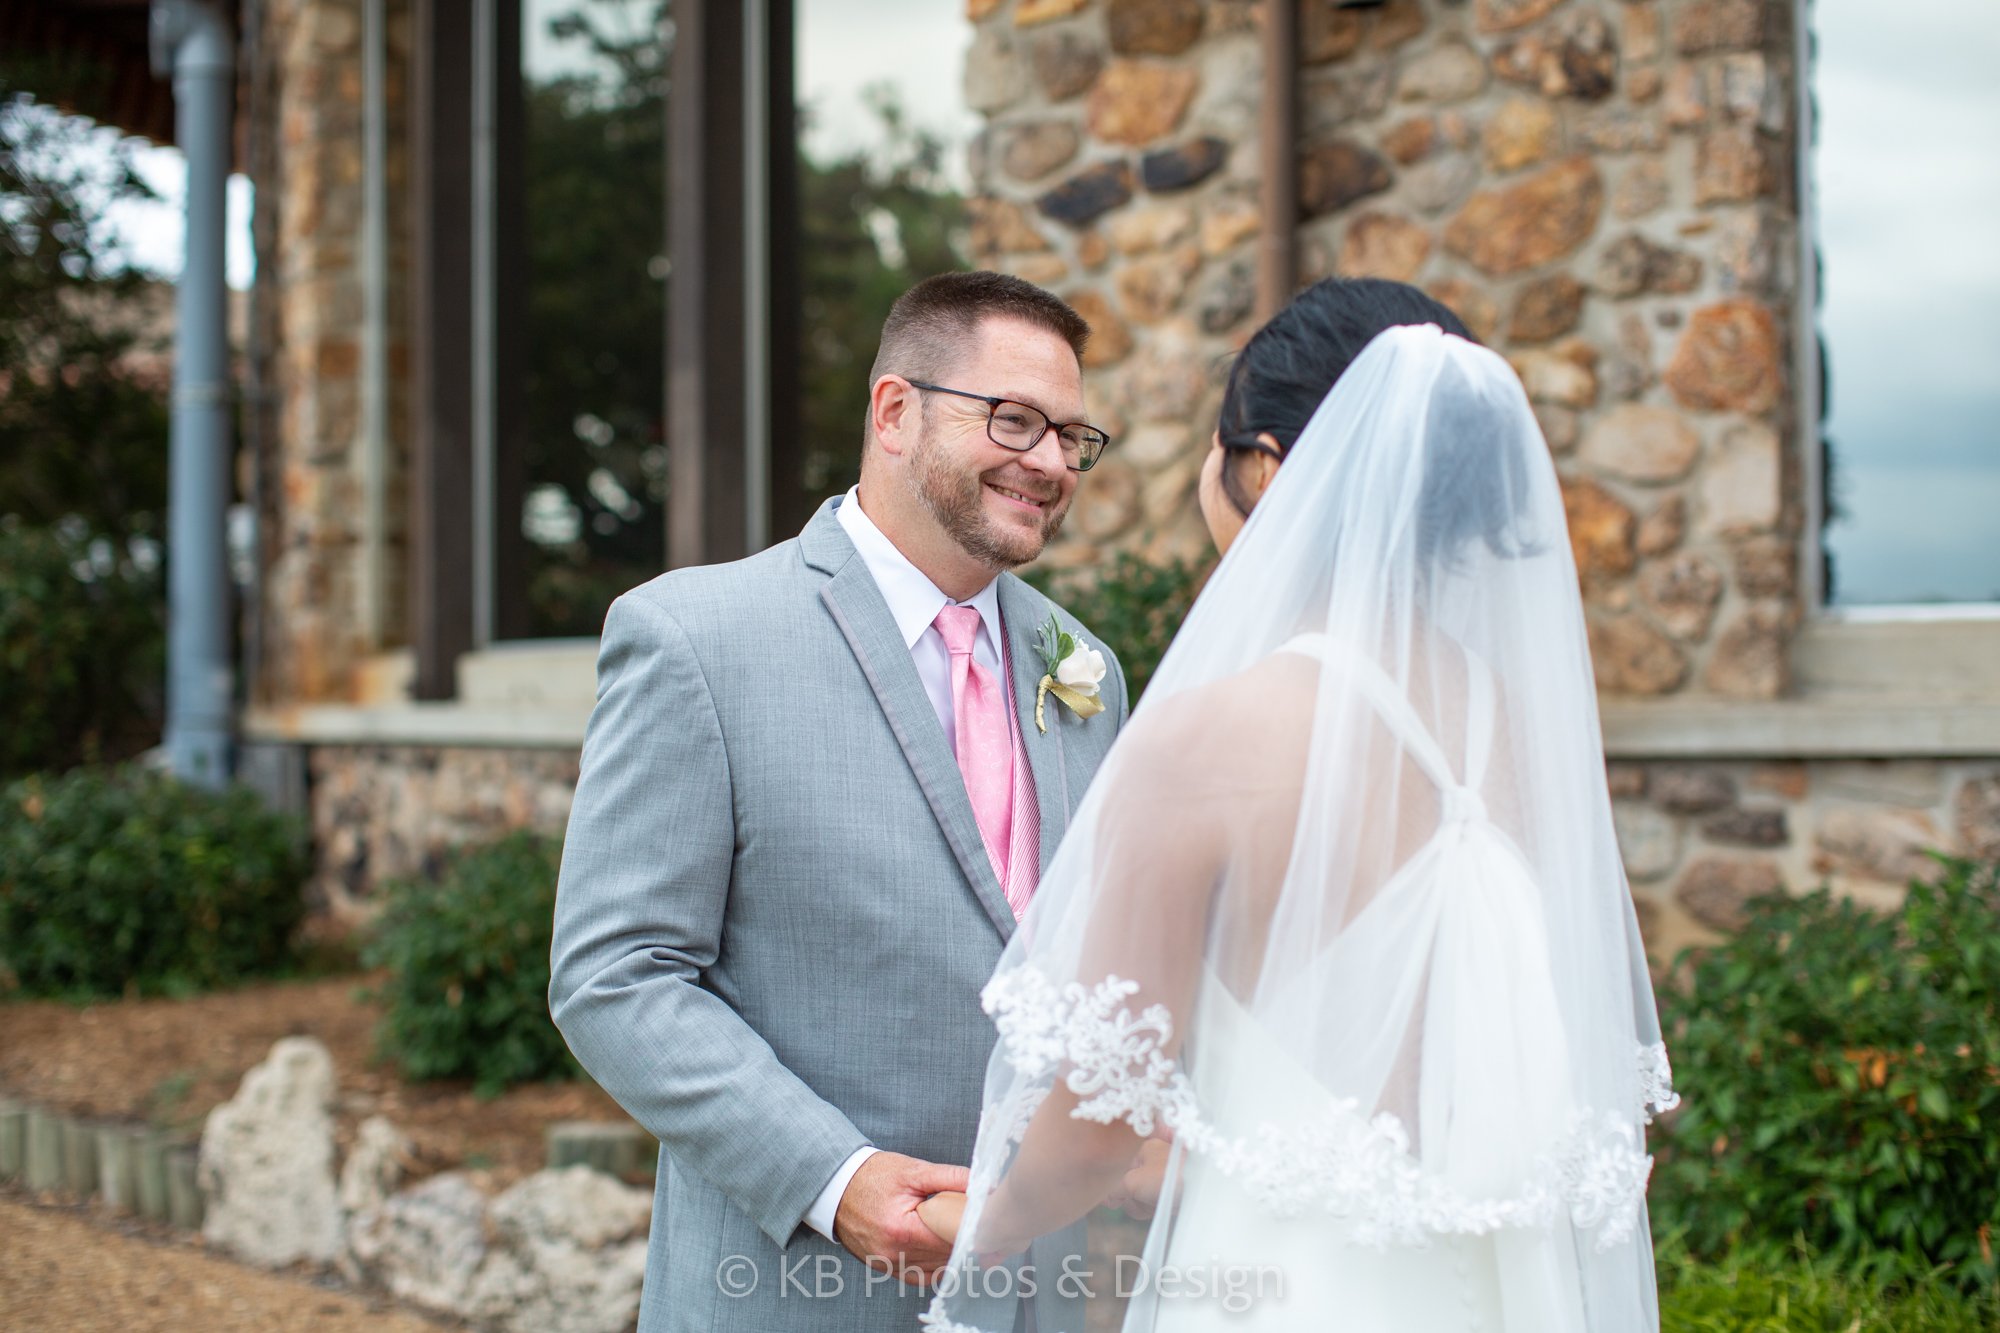 Wedding-Destination-Photography-Lake-of-the-Ozarks-Missouri-Nick_Irene-Jefferson-City-bride-groom-Lodge-of-Four-Seasons-wedding-photographer-KB-Photos-and-Design-137.jpg